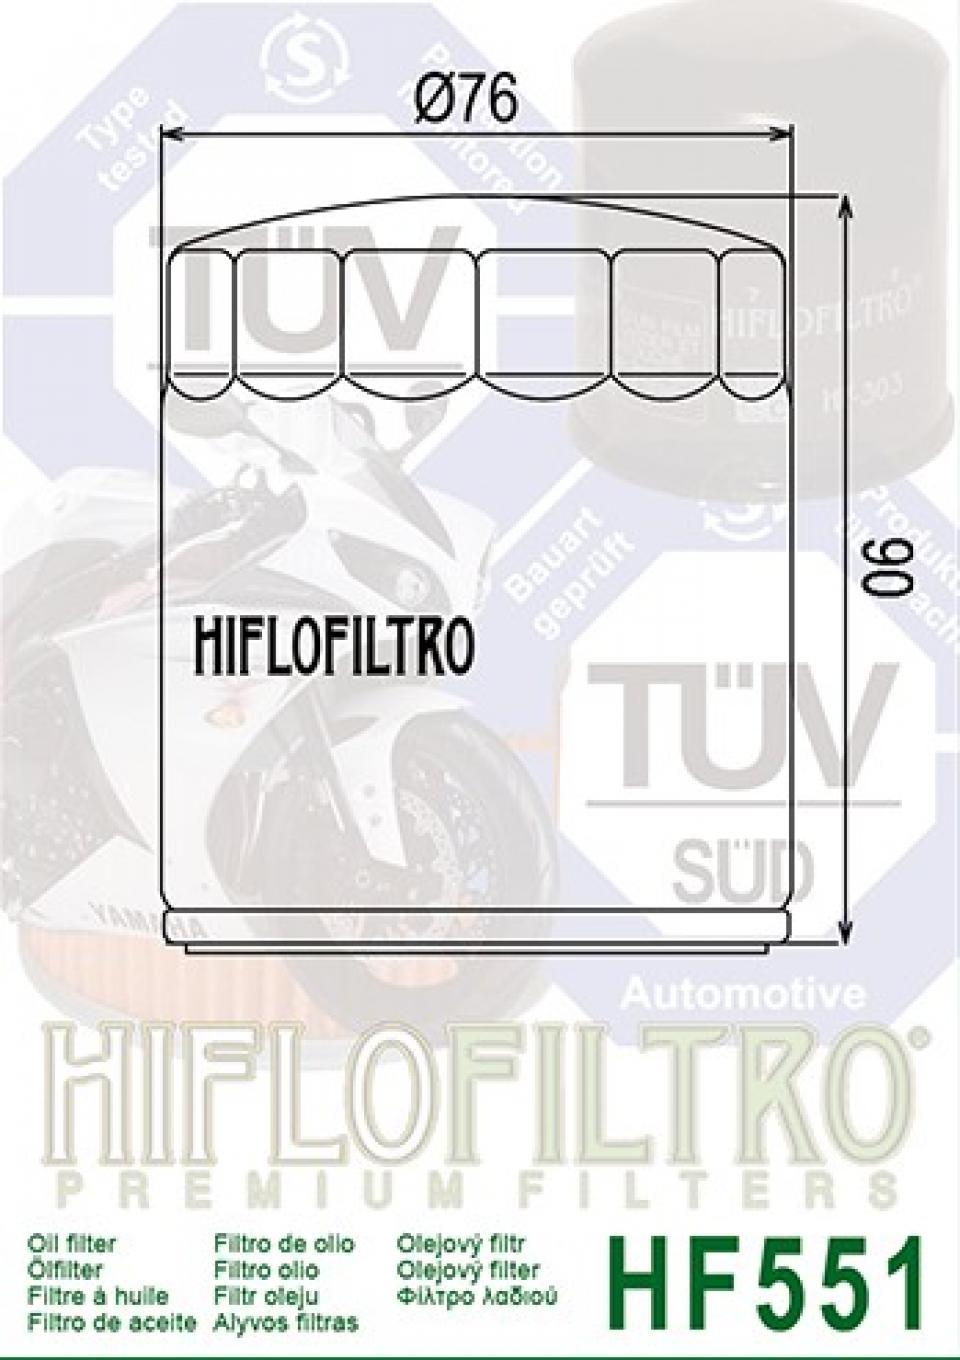 Filtre à huile Hiflo Filtro pour Moto pour Moto GUZZI 1100 Quota Es 1999-2001 Neuf